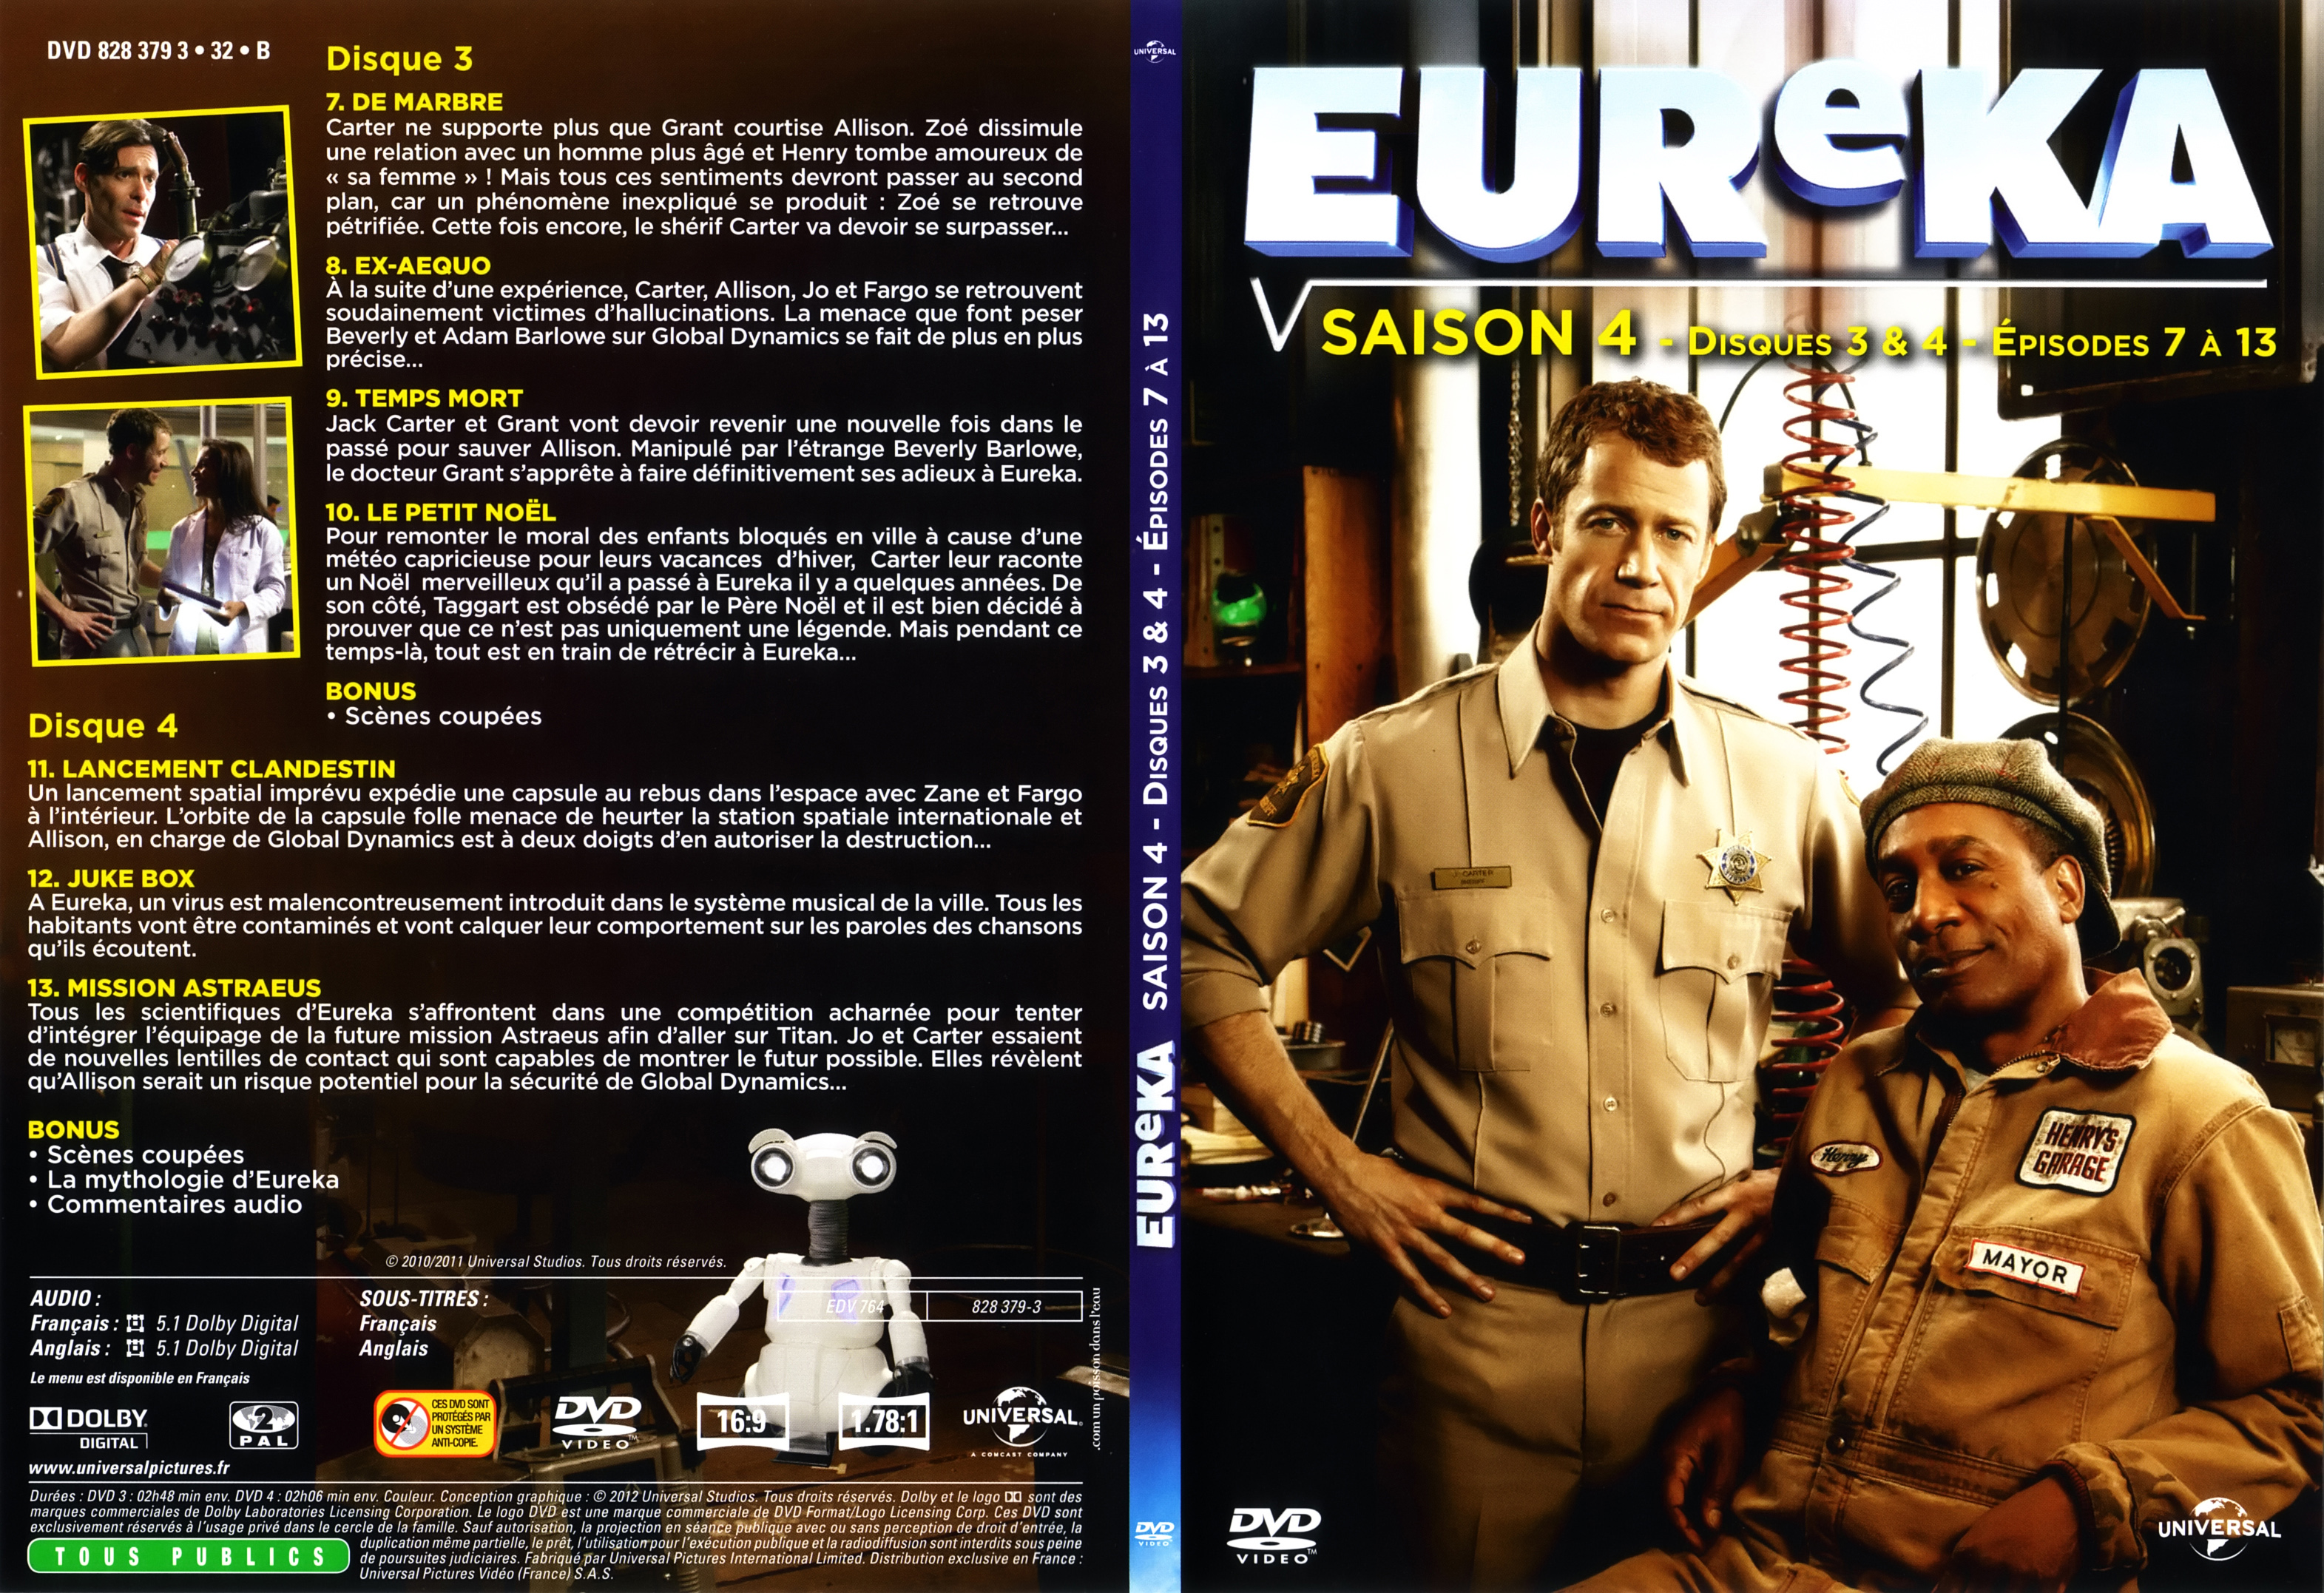 Jaquette DVD Eureka saison 4 DVD 2